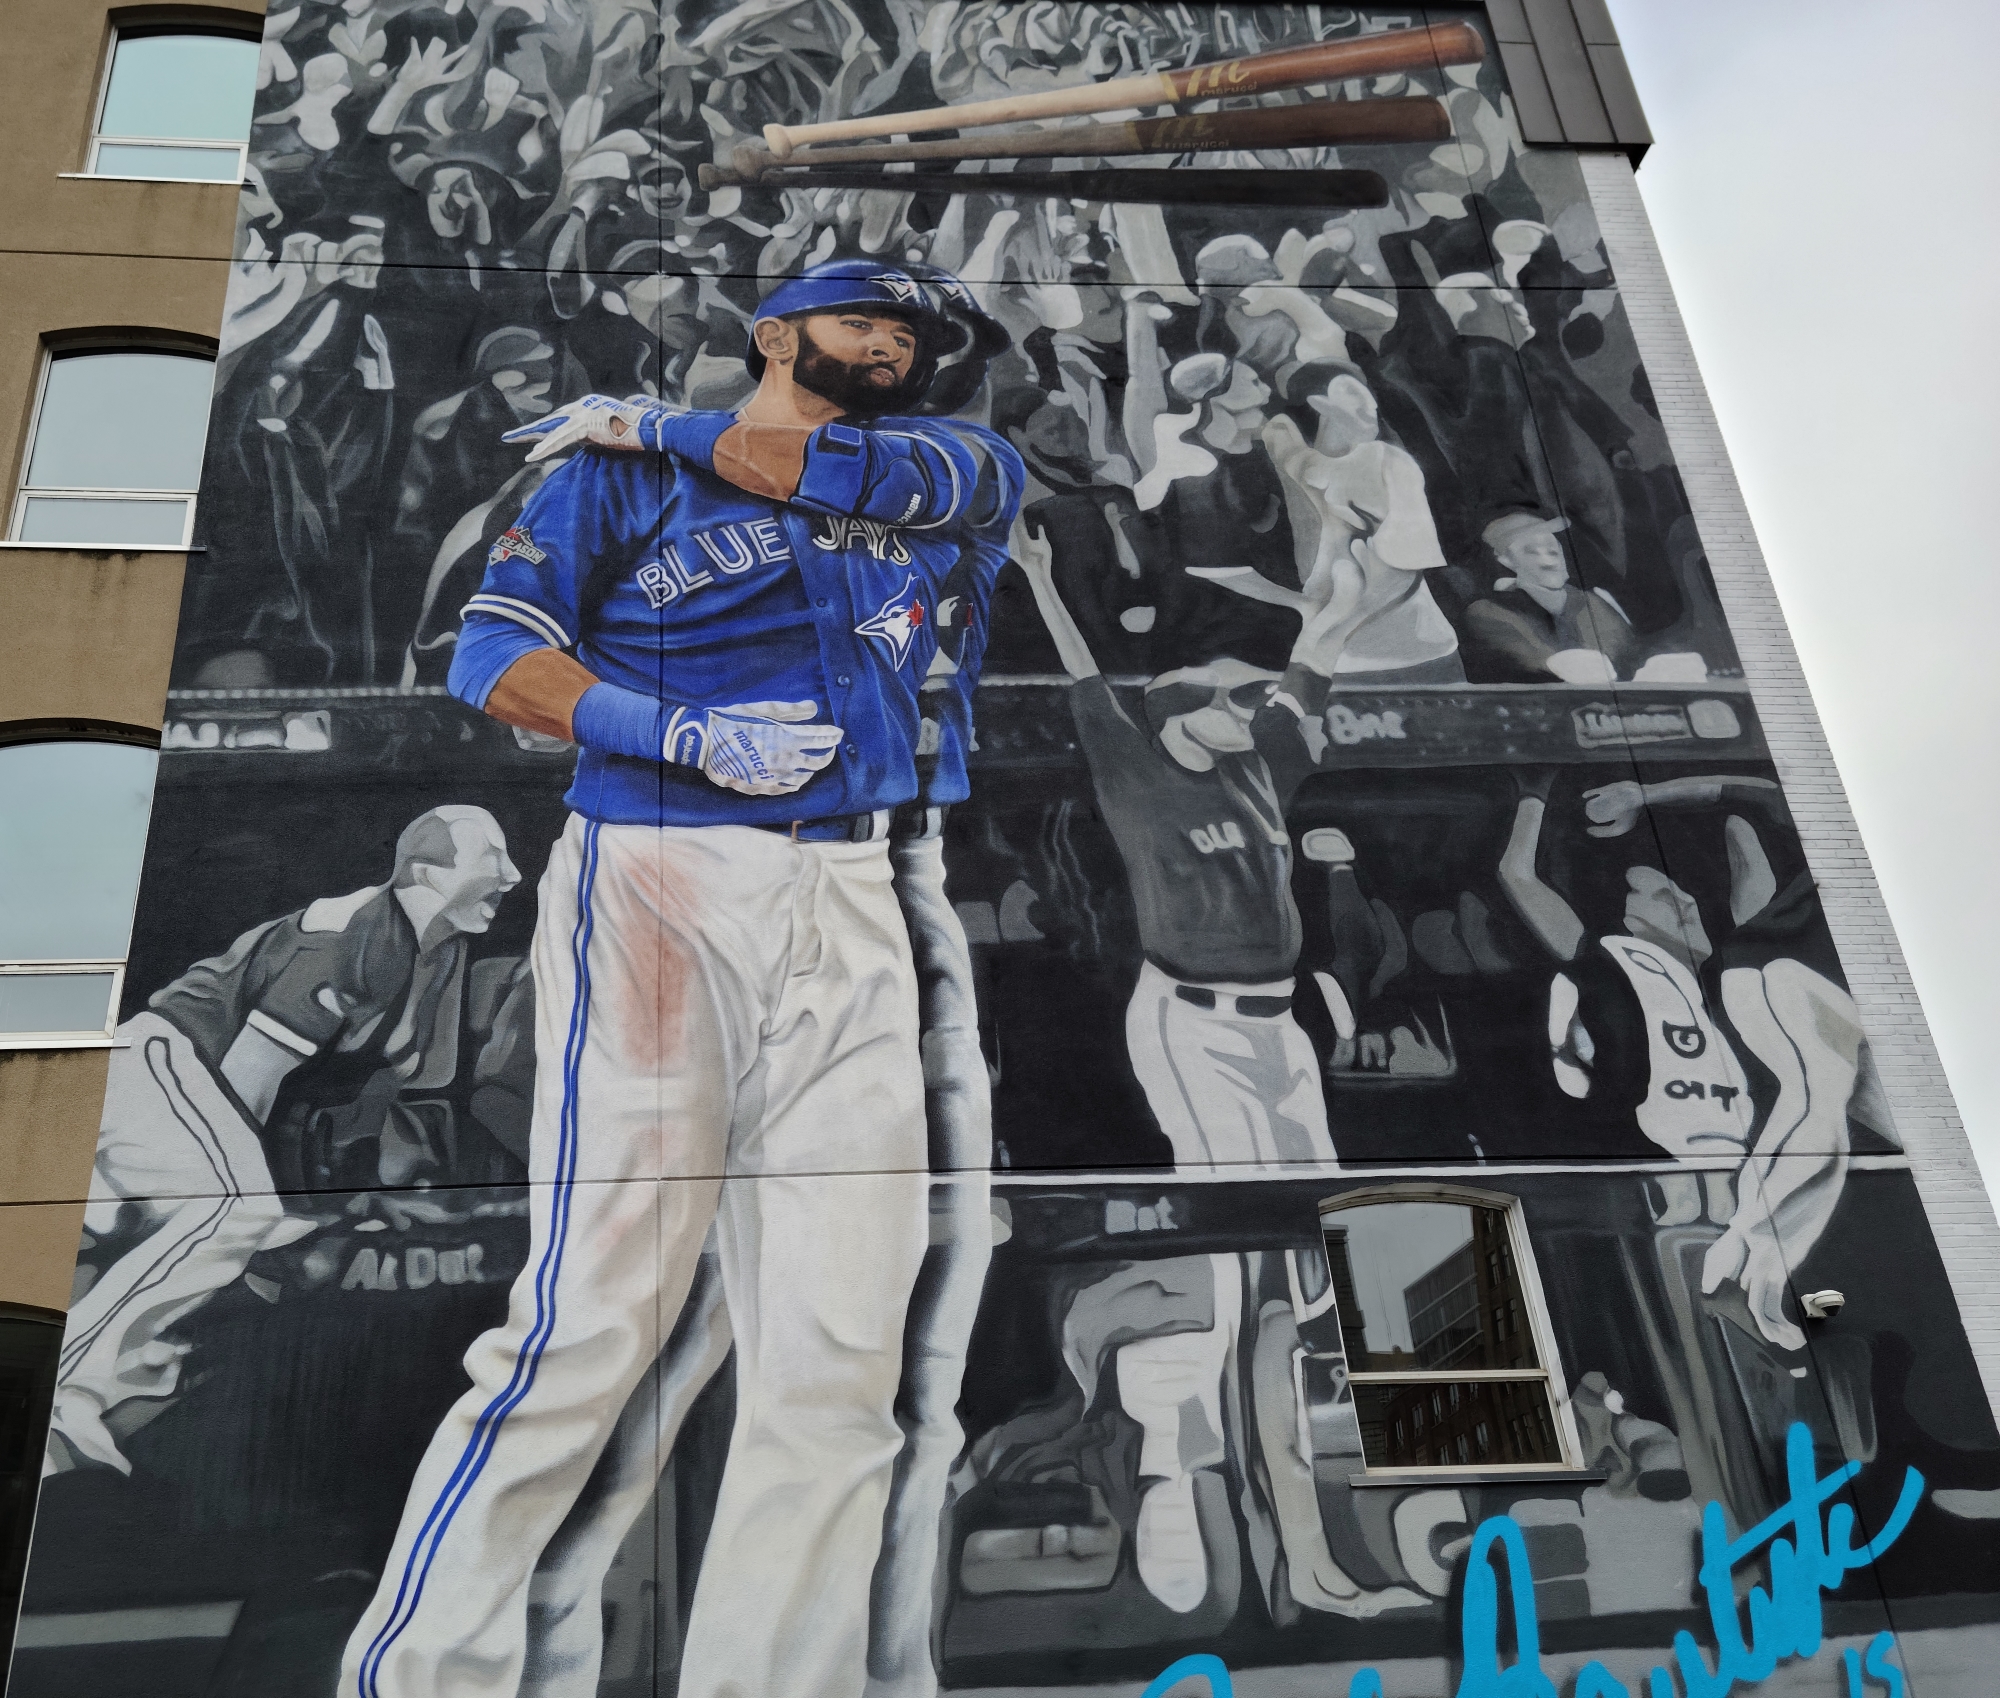 Jose Bautista bat flip mural - Toronto Blue Jays